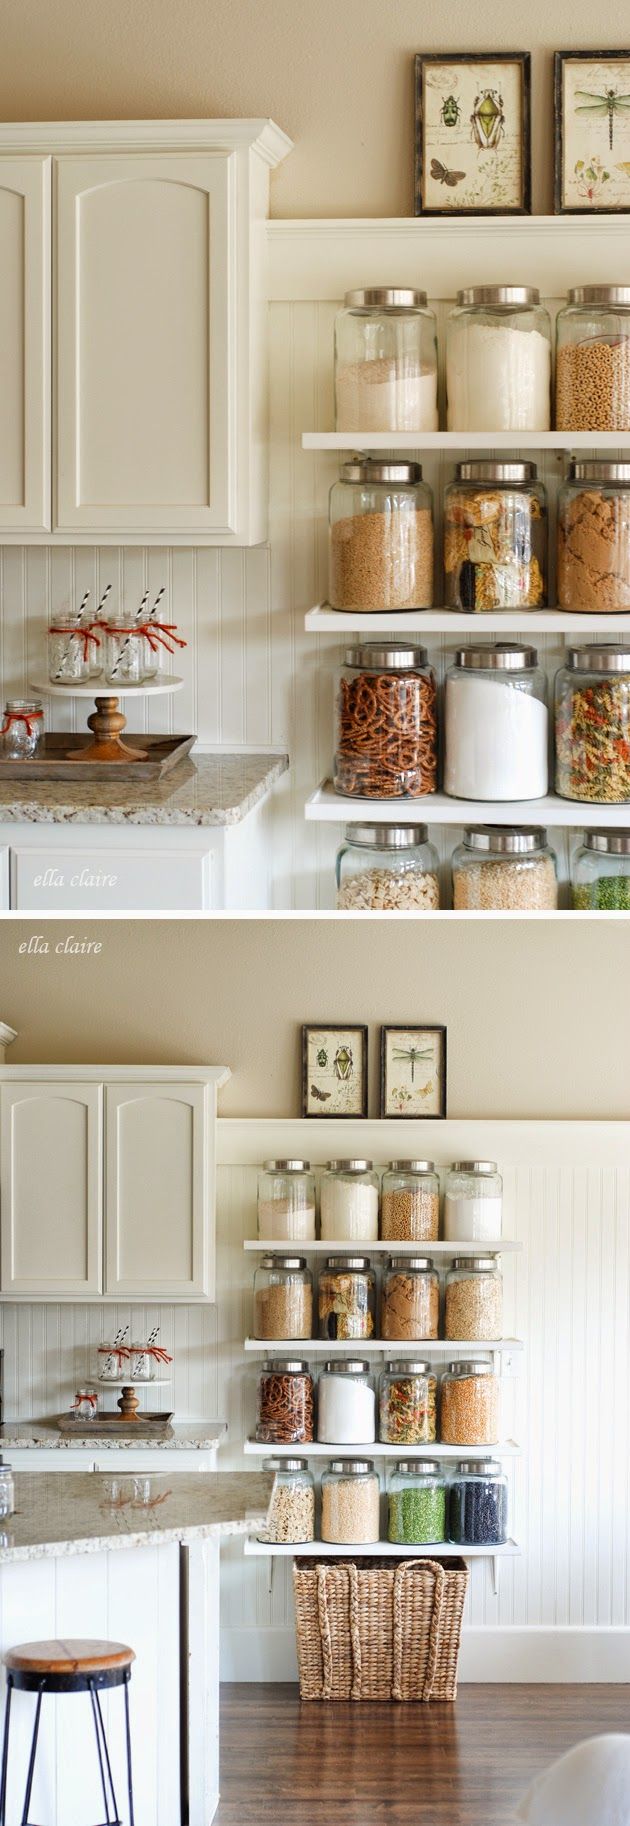 Creatice Kitchen Organization Ideas Small Spaces Pinterest 